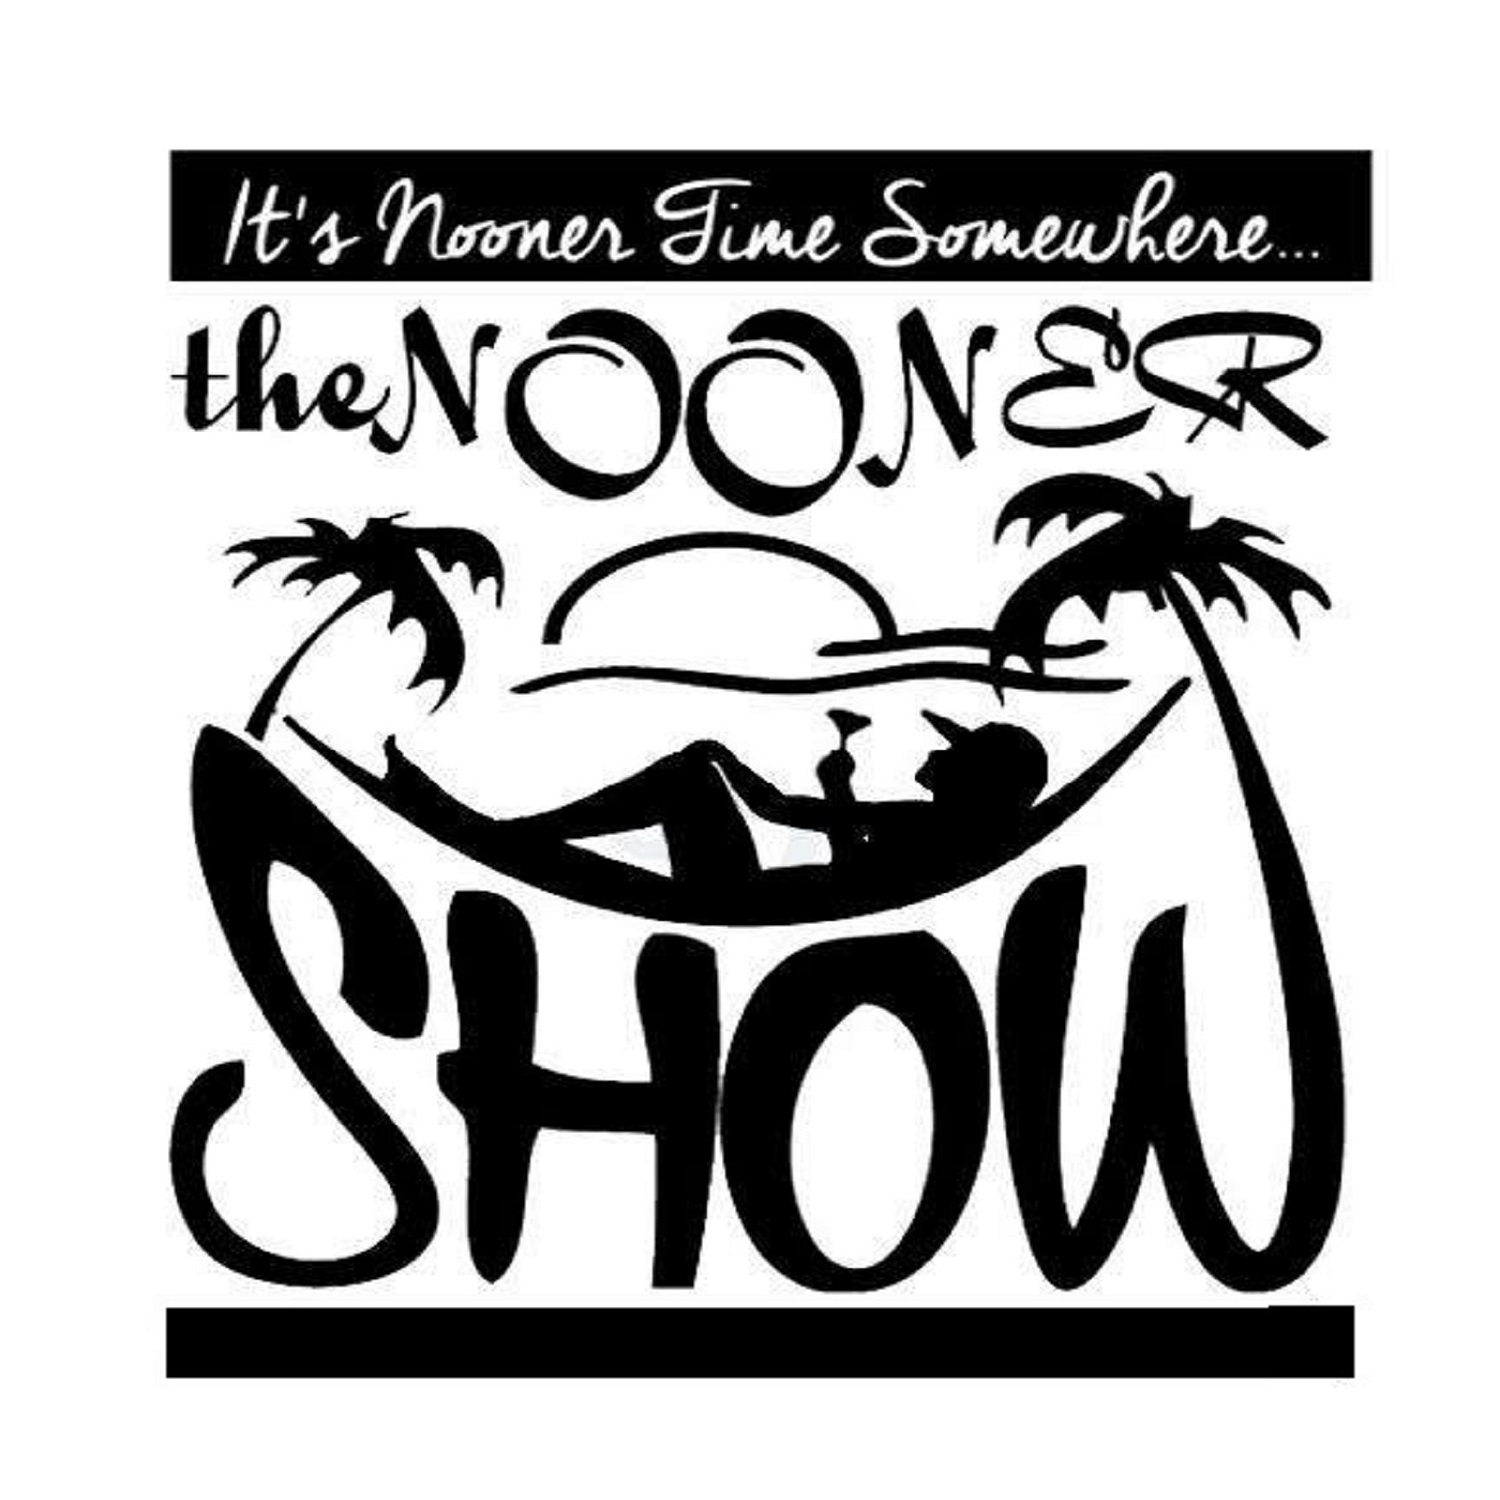 The Nooner Show – Episode 192